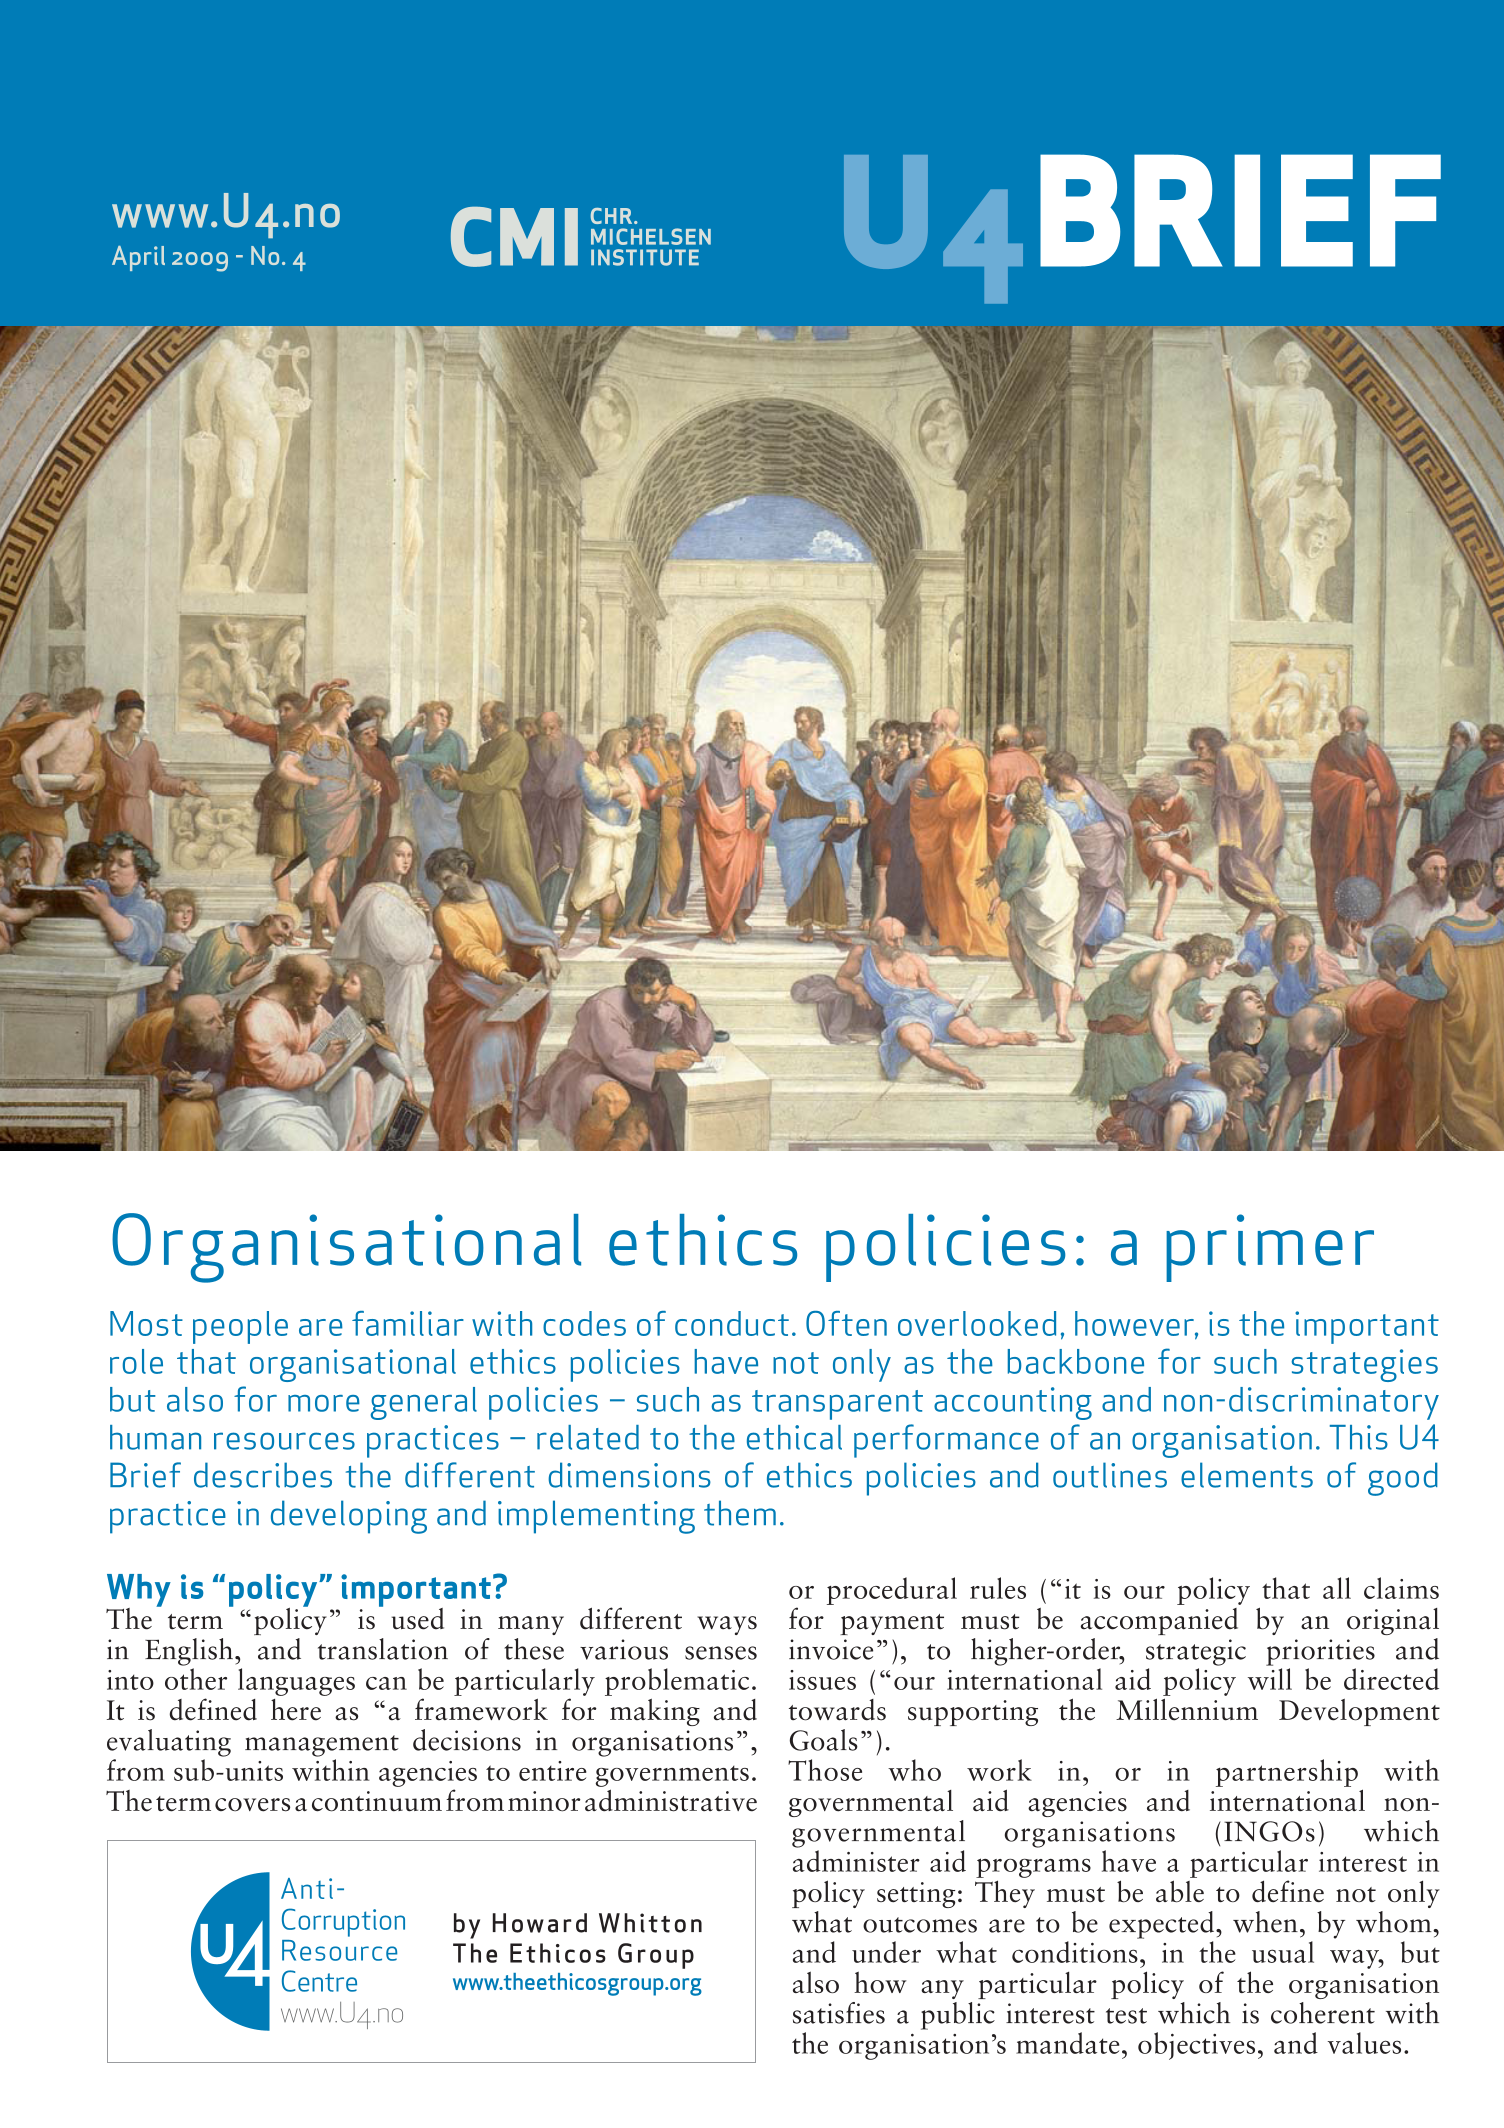 Organisational ethics policies: A primer